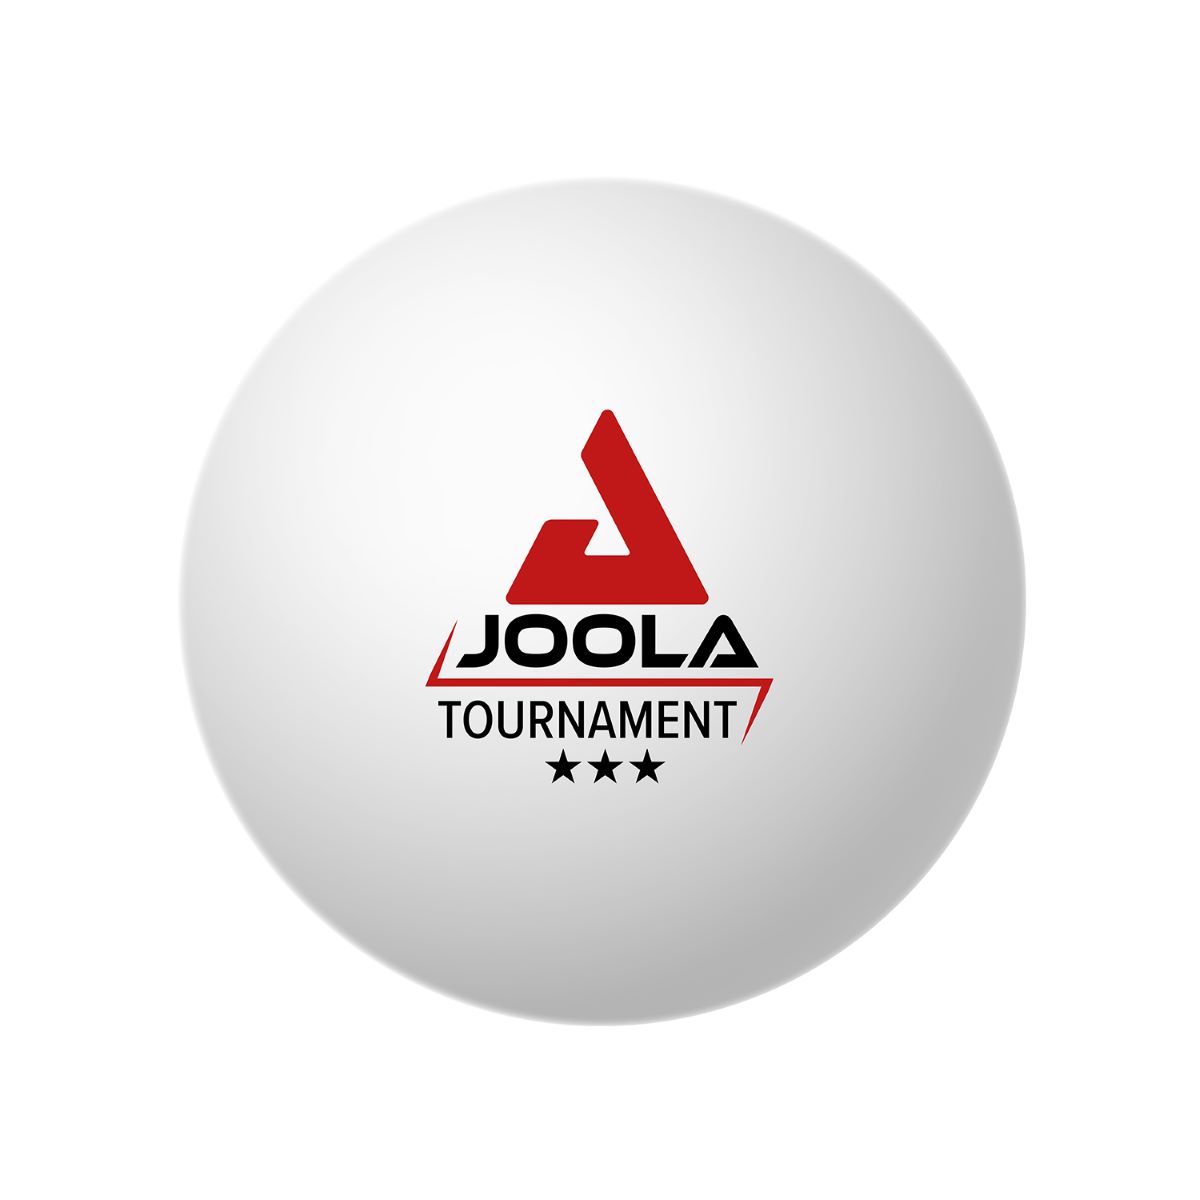 44322_JOOLA_Tournament-40_12_02_web